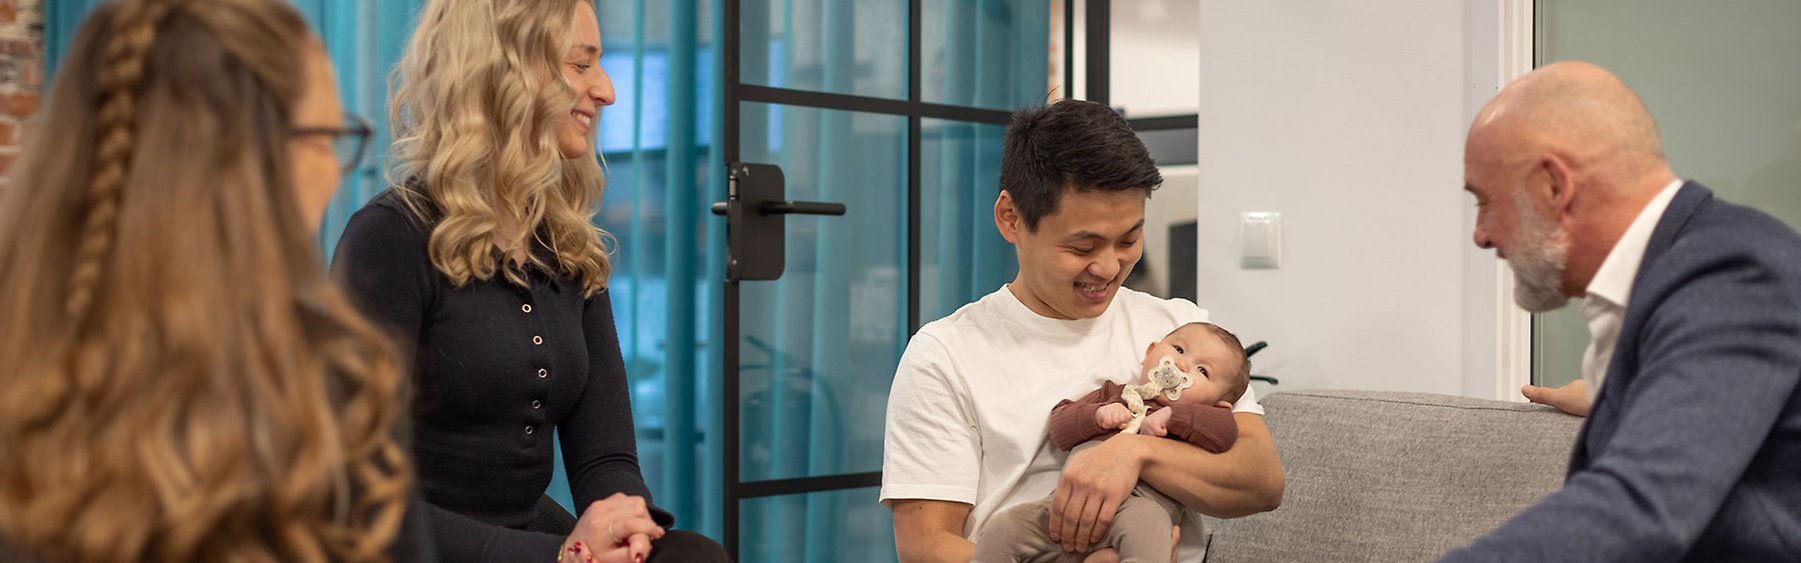 Glada personer runt bebis i kontorsmiljö.